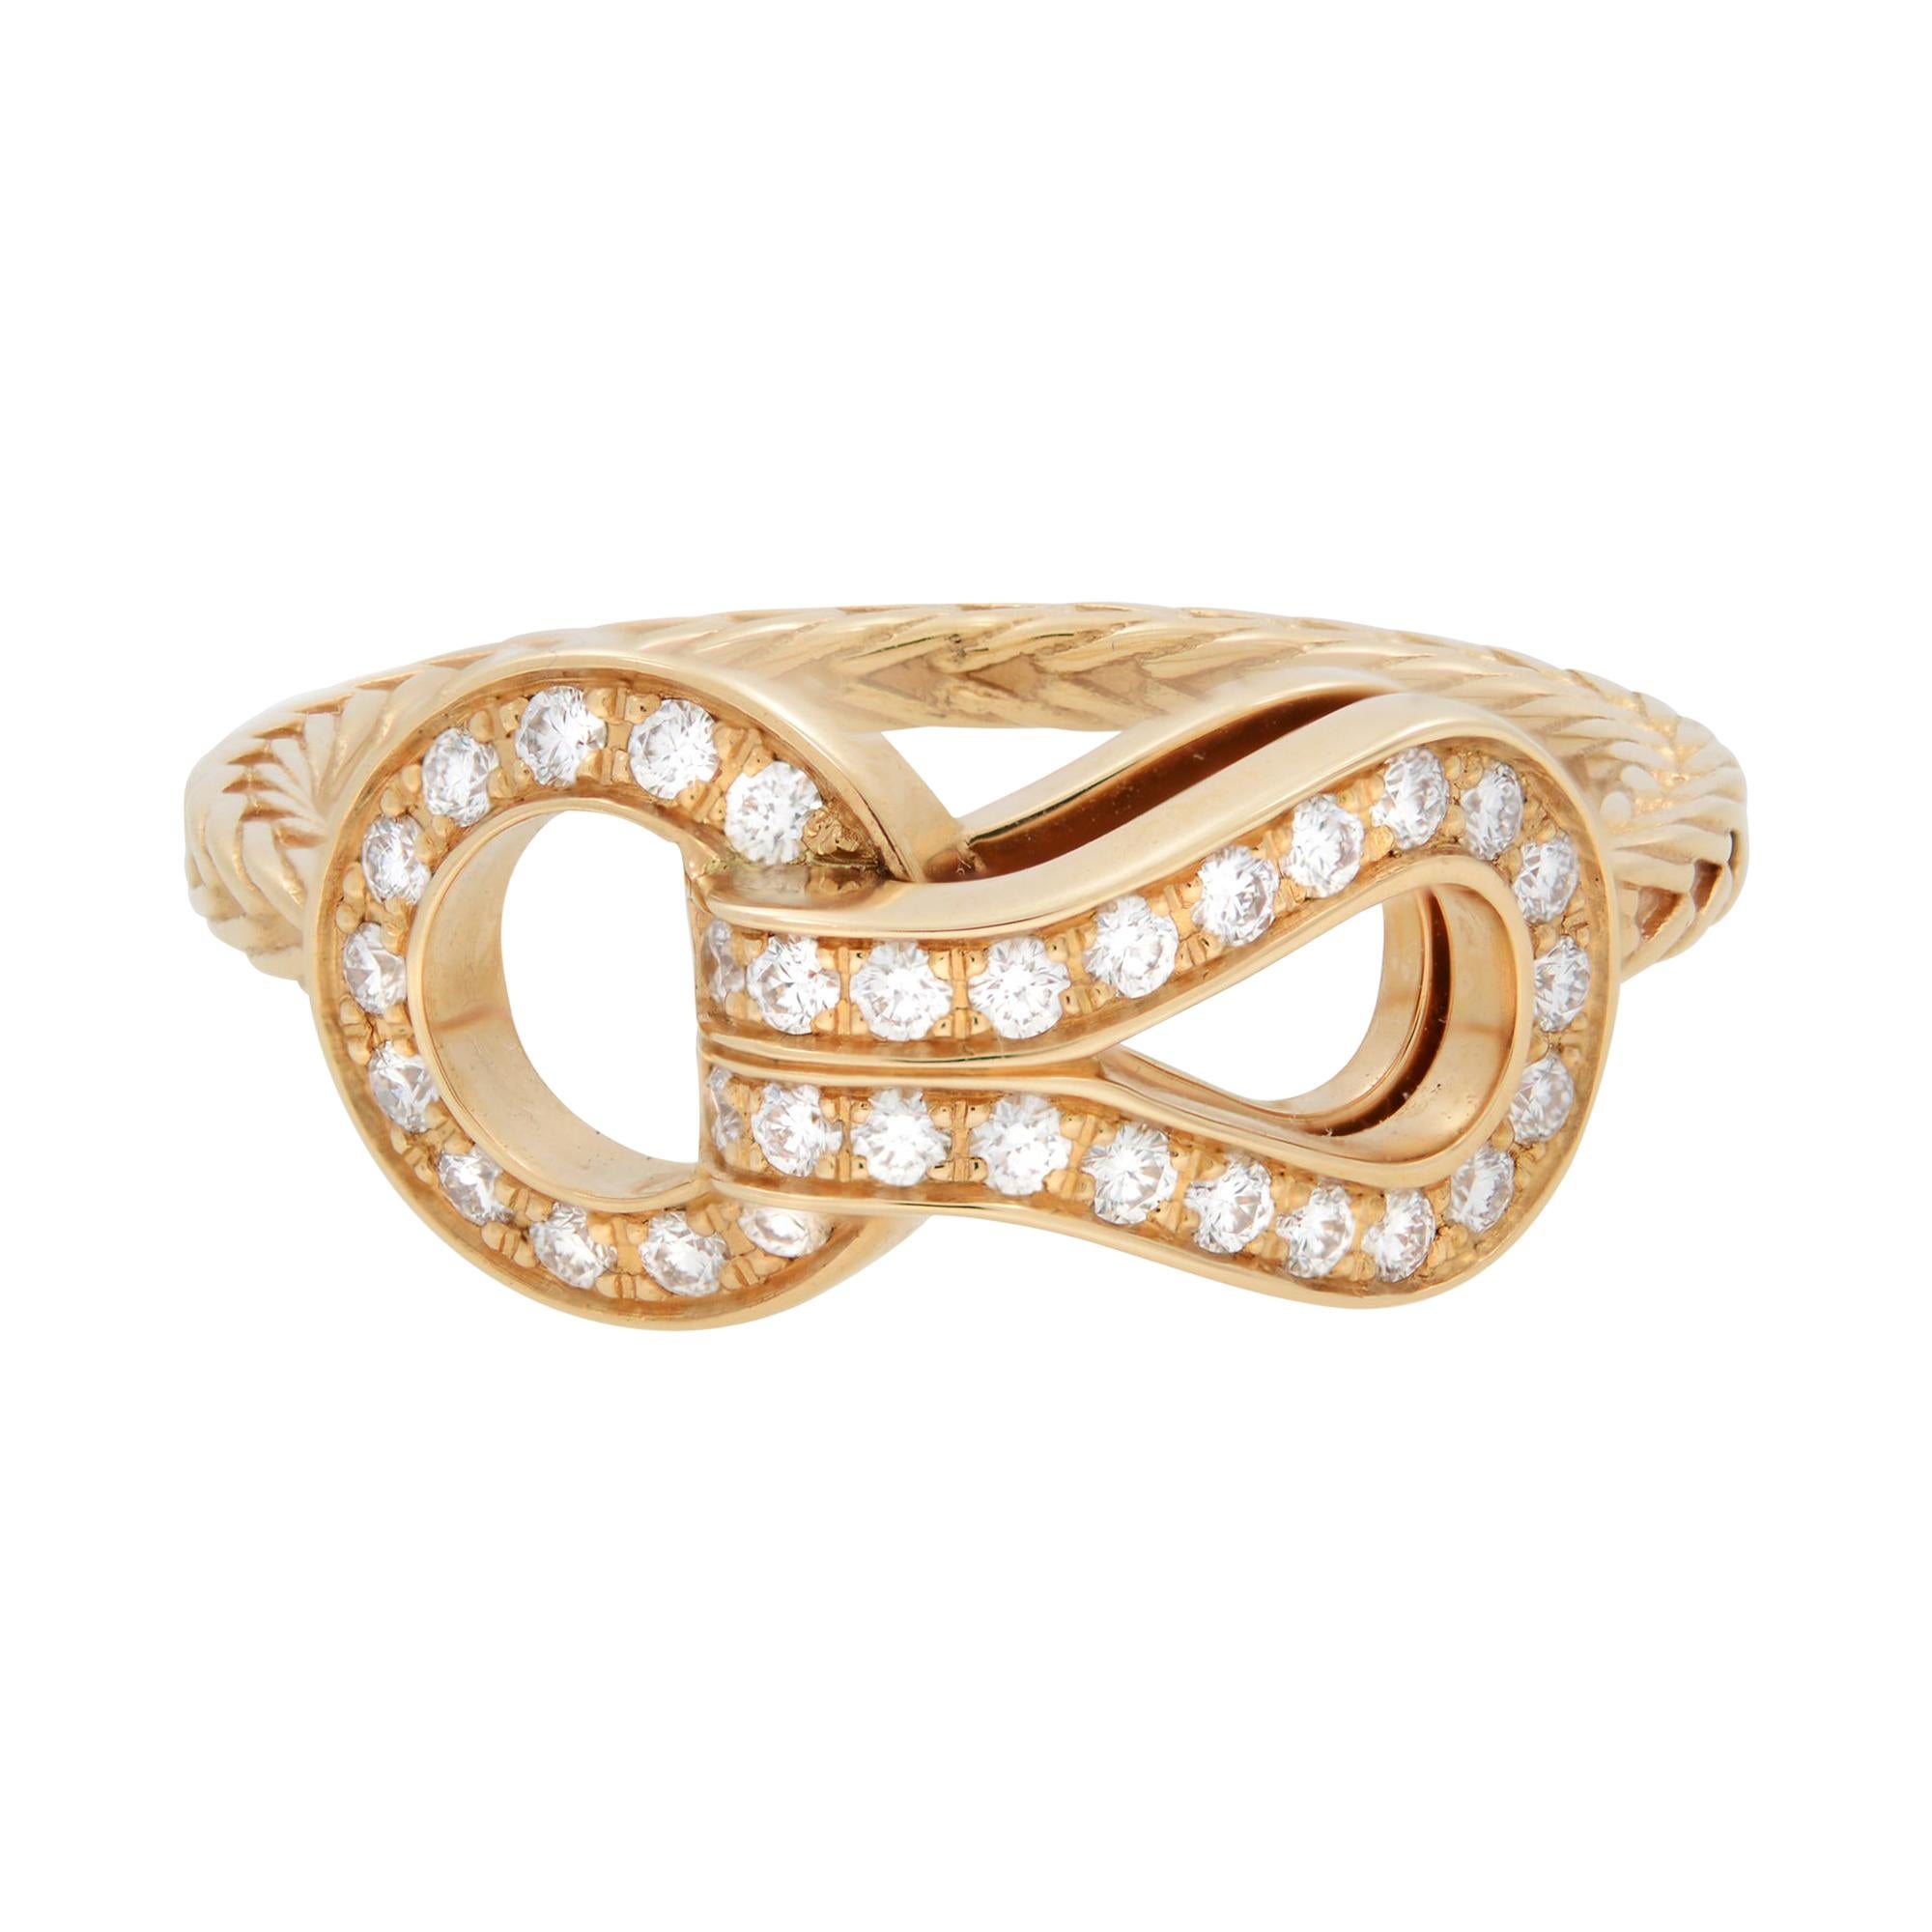 Cartier Agrafe 18k Yellow Gold Diamond Ladies Ring 0.23cttw